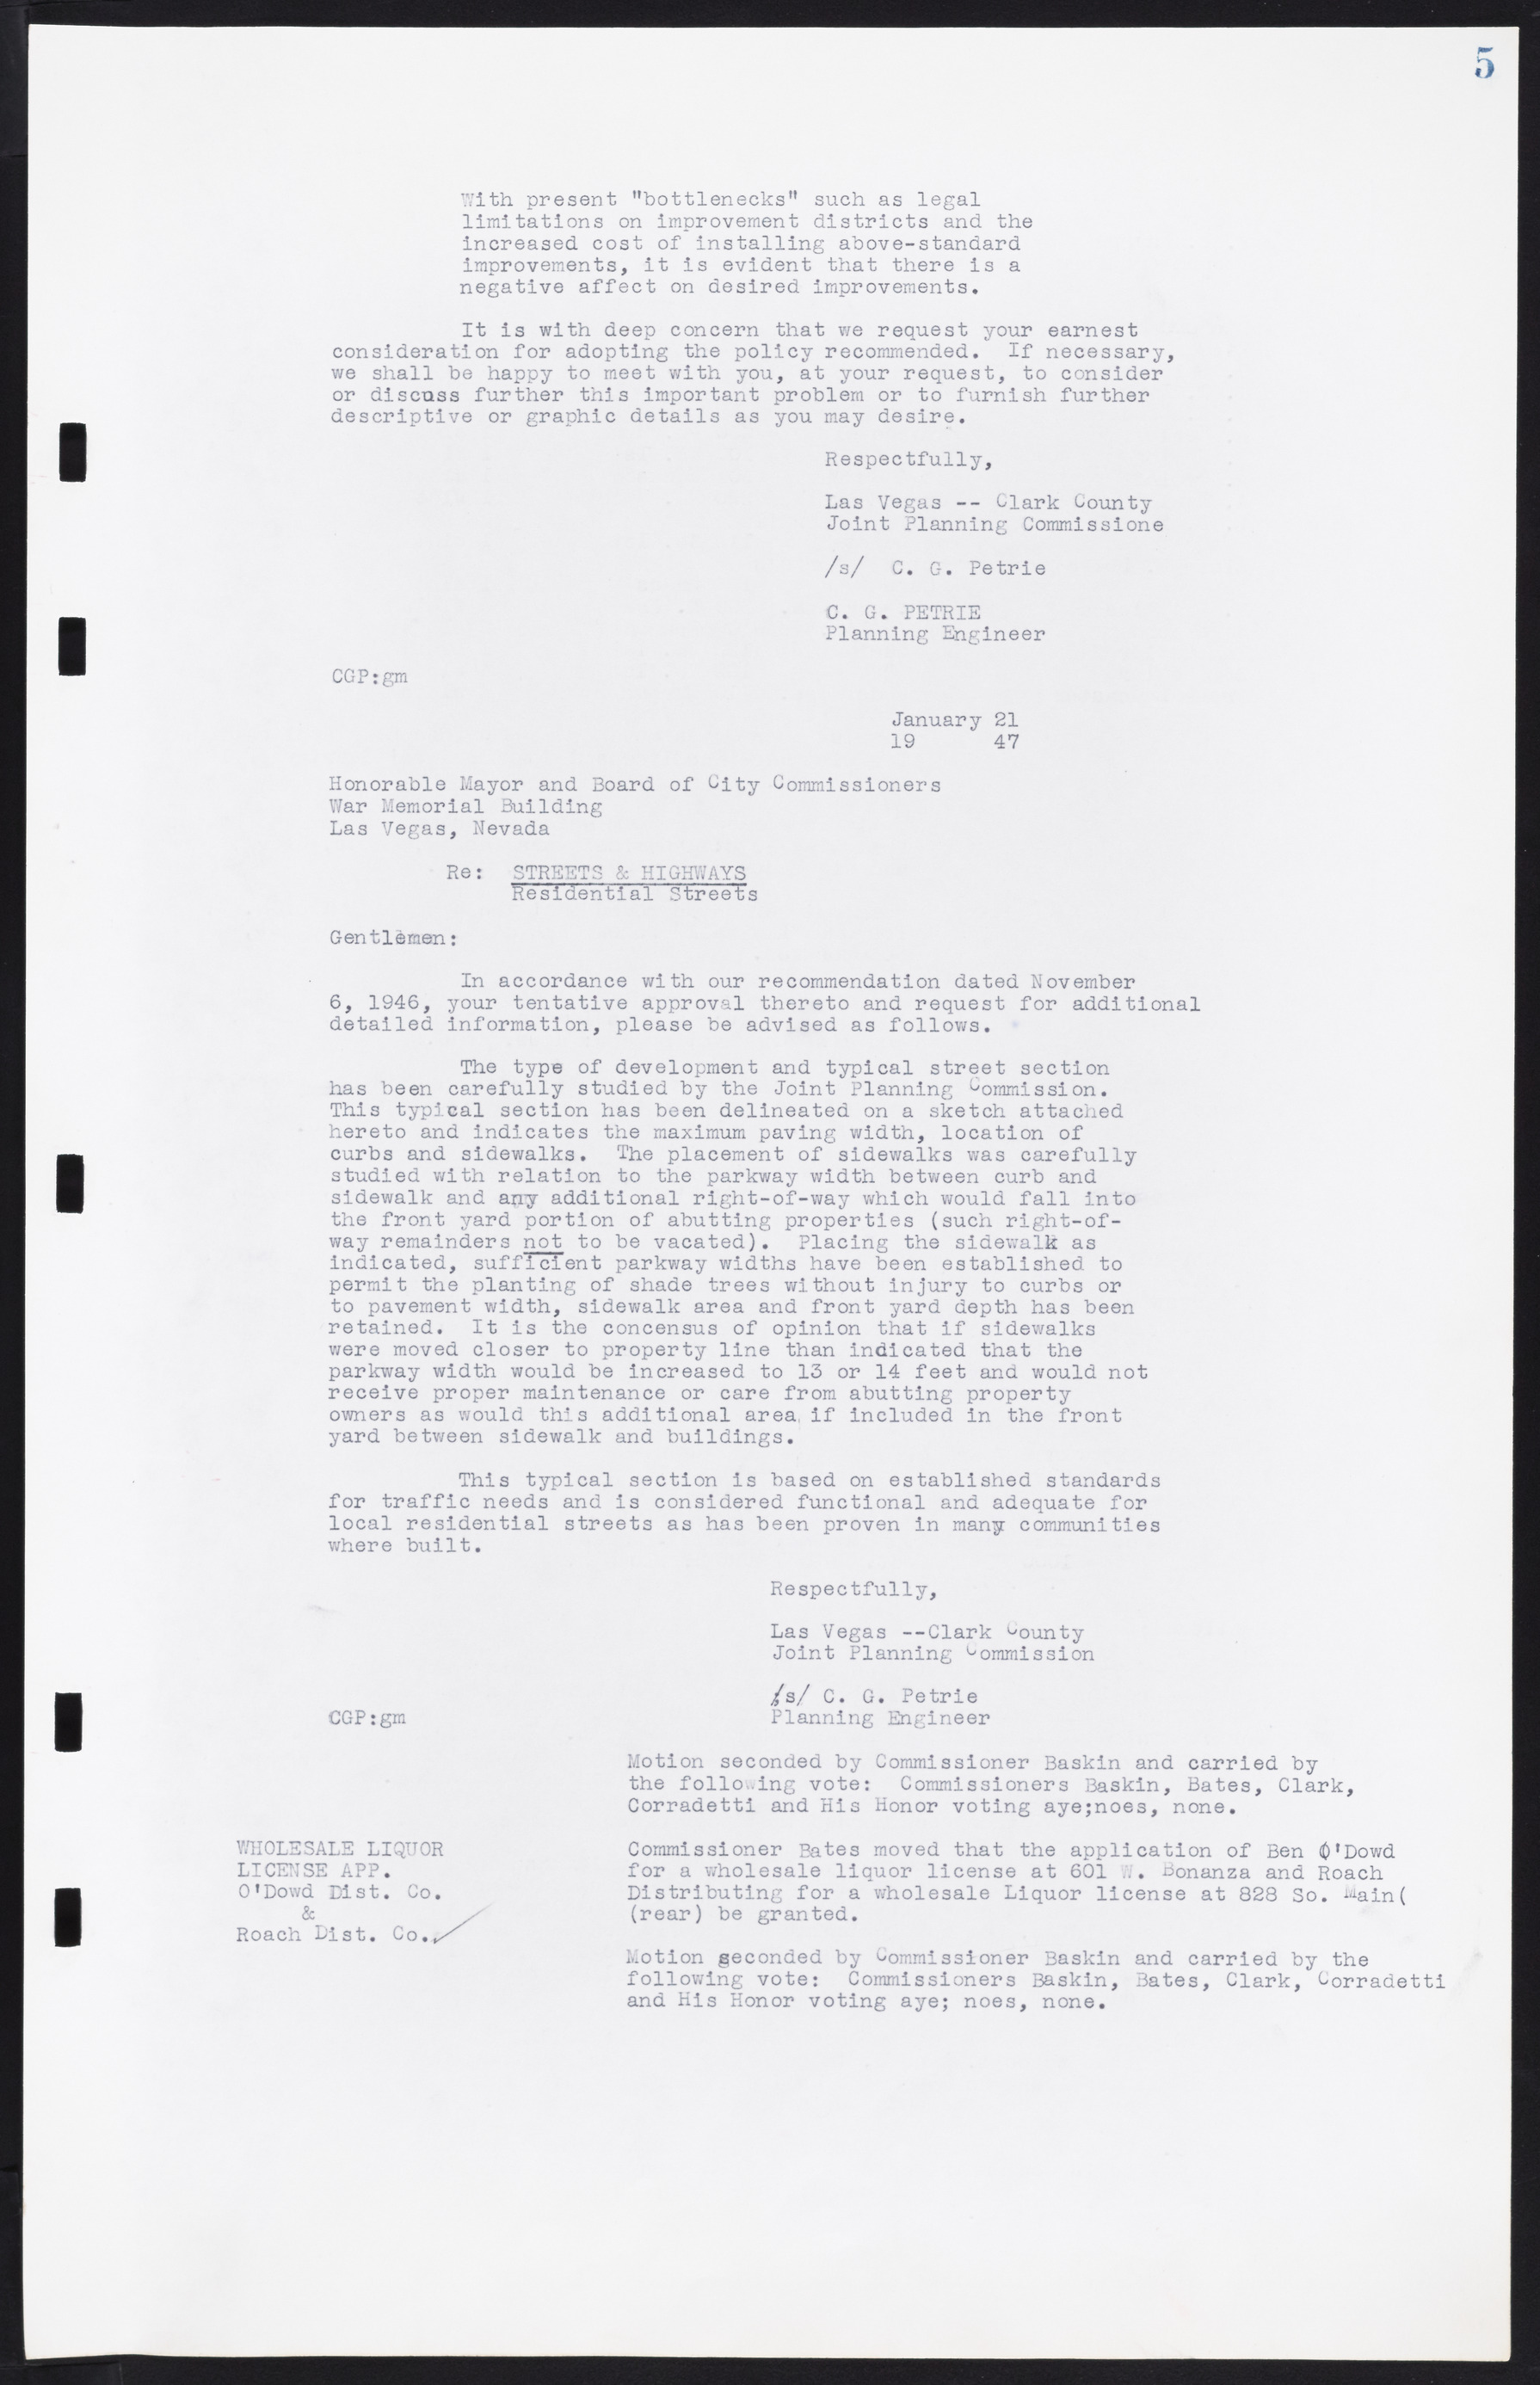 Las Vegas City Commission Minutes, January 7, 1947 to October 26, 1949, lvc000006-13